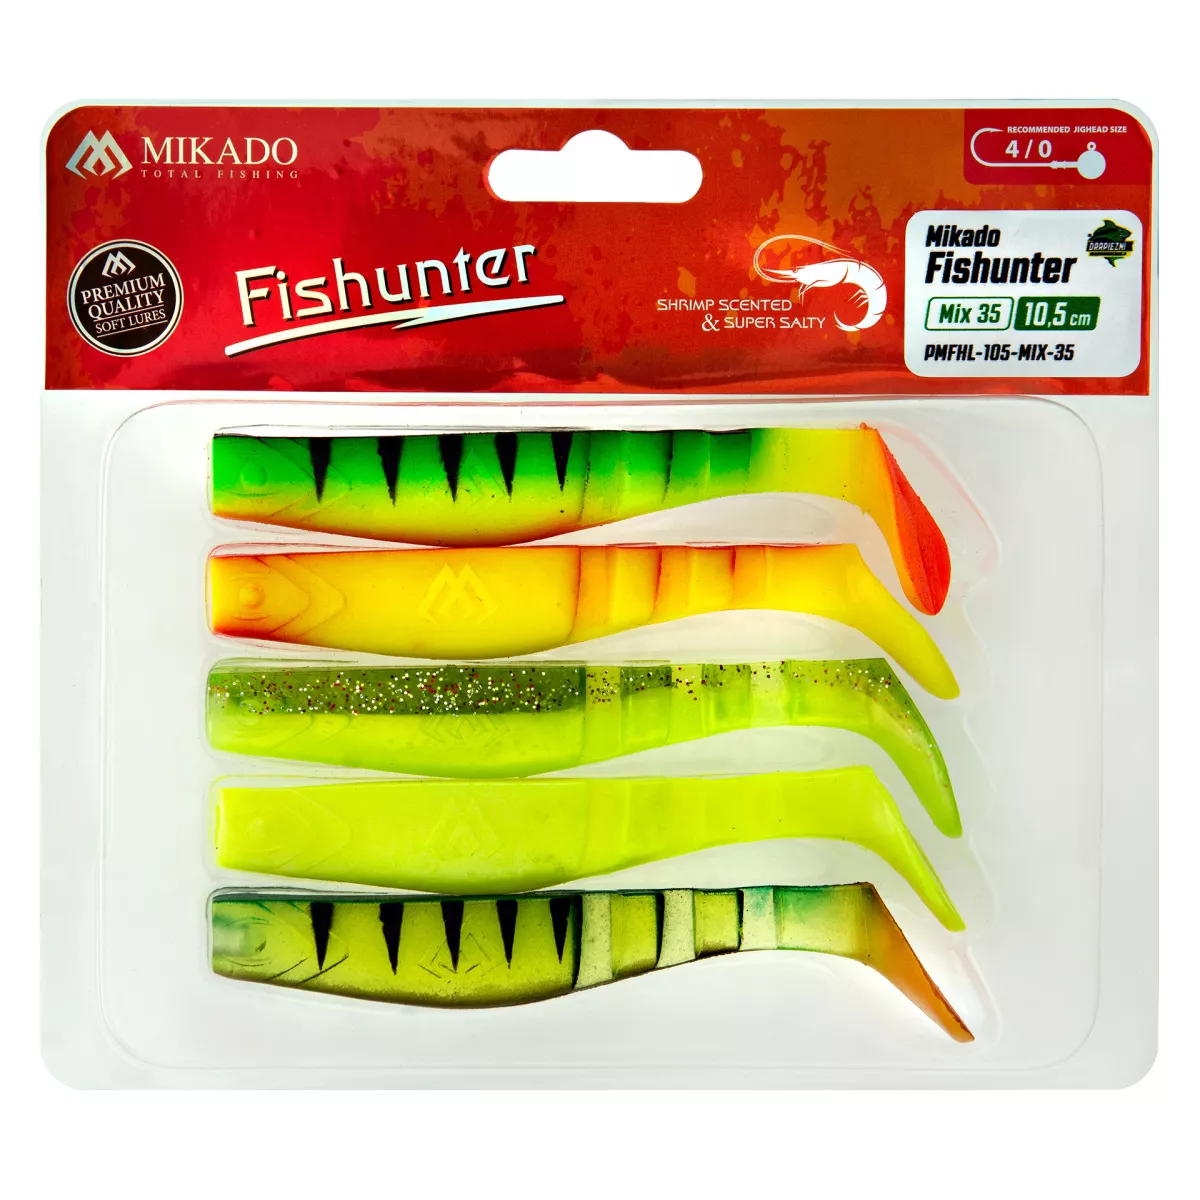 Zestaw gum Mikado Fishunter 10.5cm 5 szt. - MIX 35